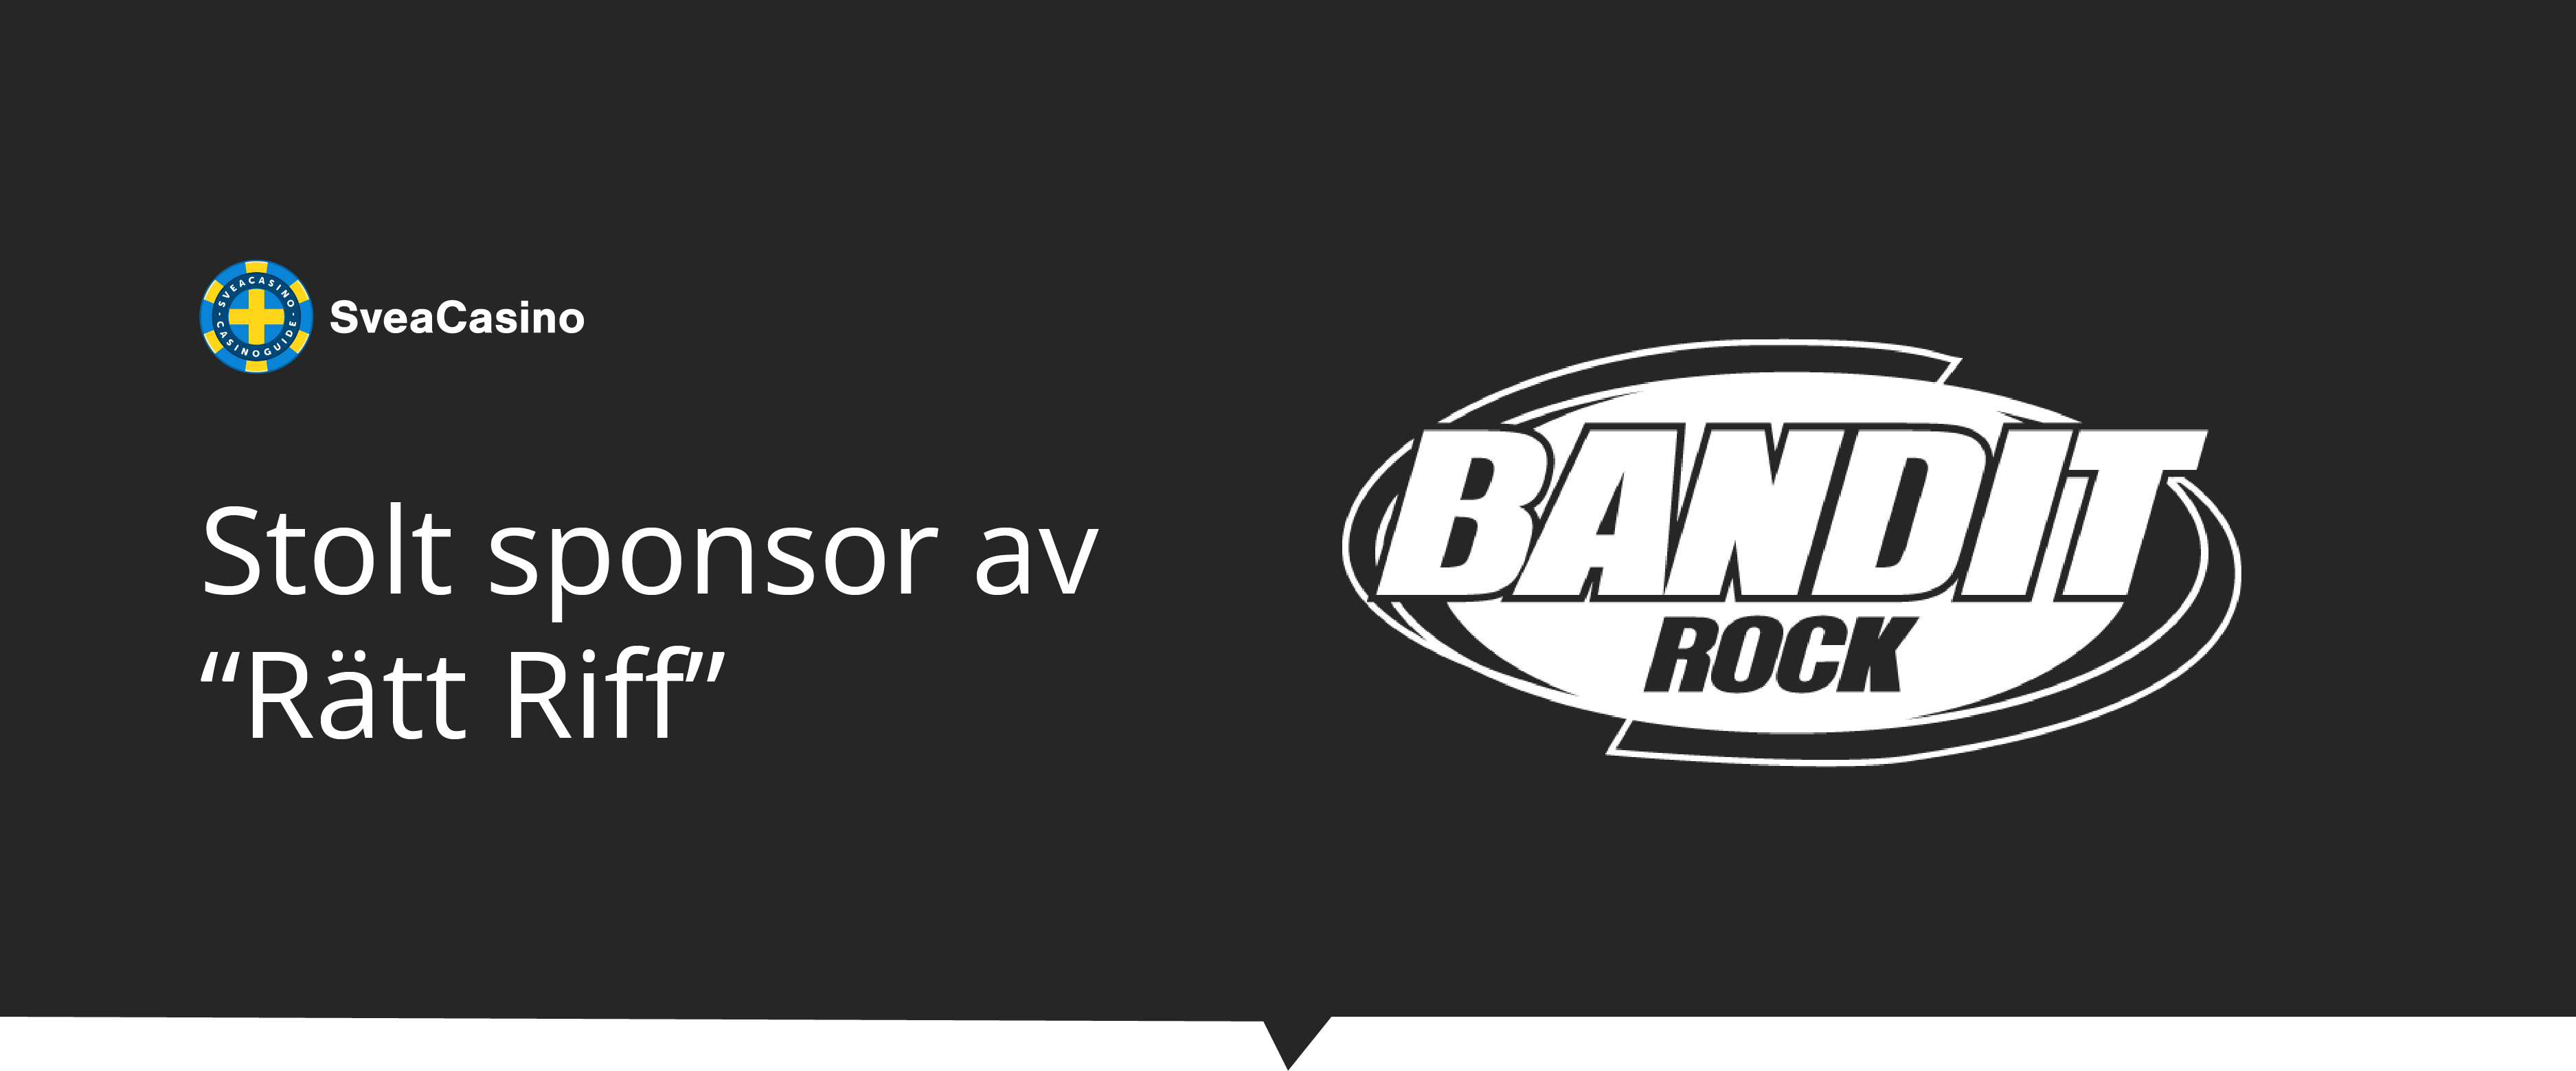 SveaCasino.se inleder samarbete med radiokanalen Bandit Rock